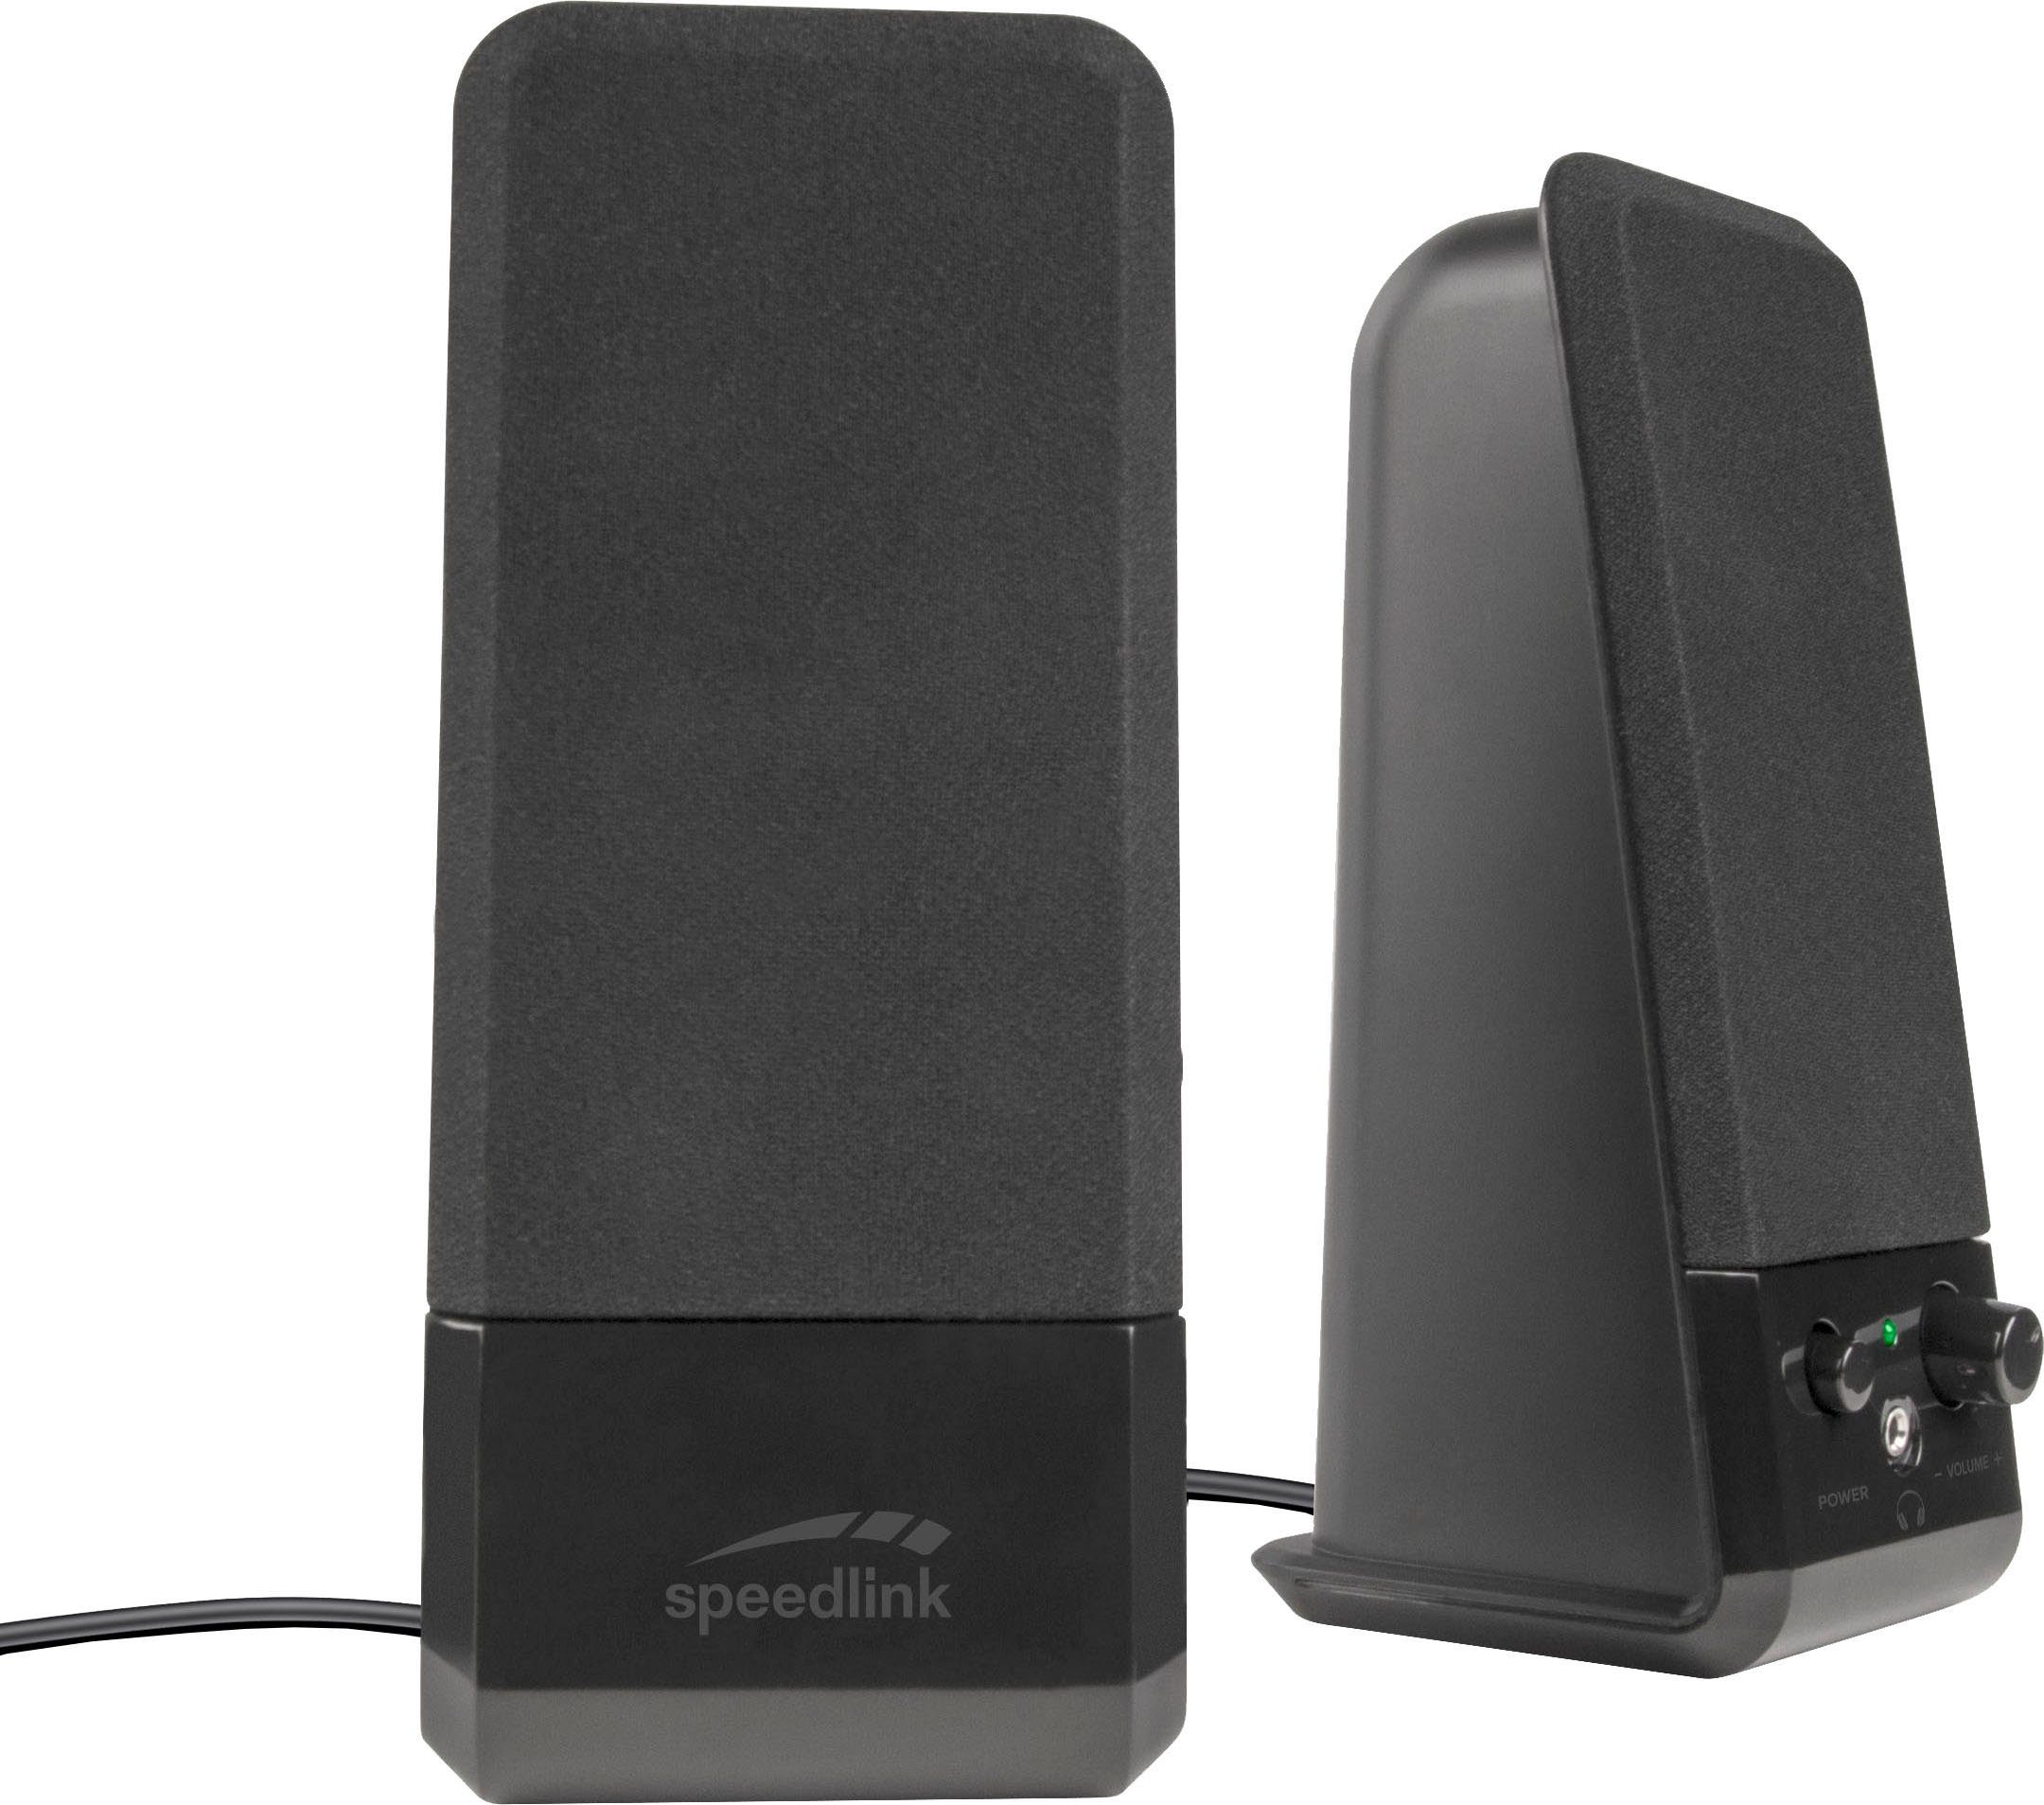 Speedlink EVENT Stereo PC-Lautsprecher (5 W)